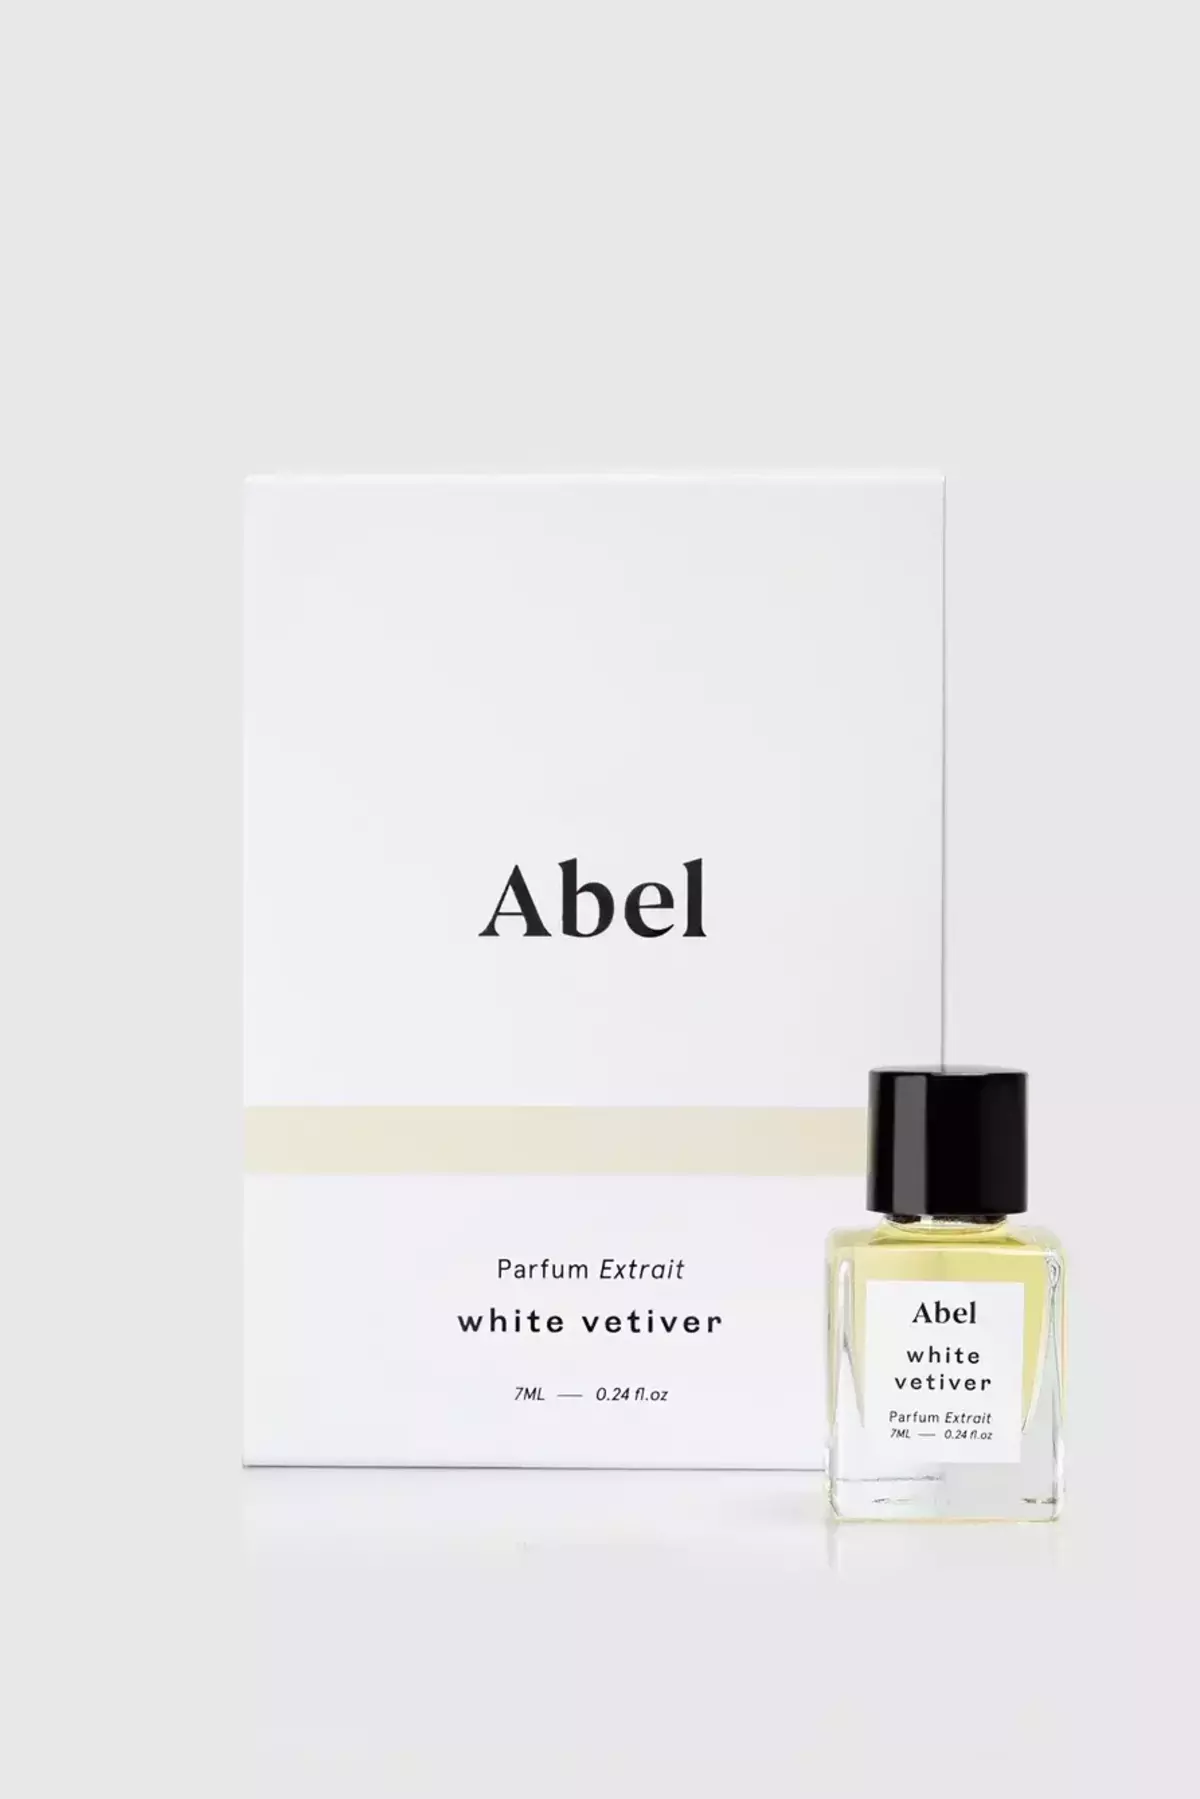 Abel White Vetiver Parfum Extrait 7ml